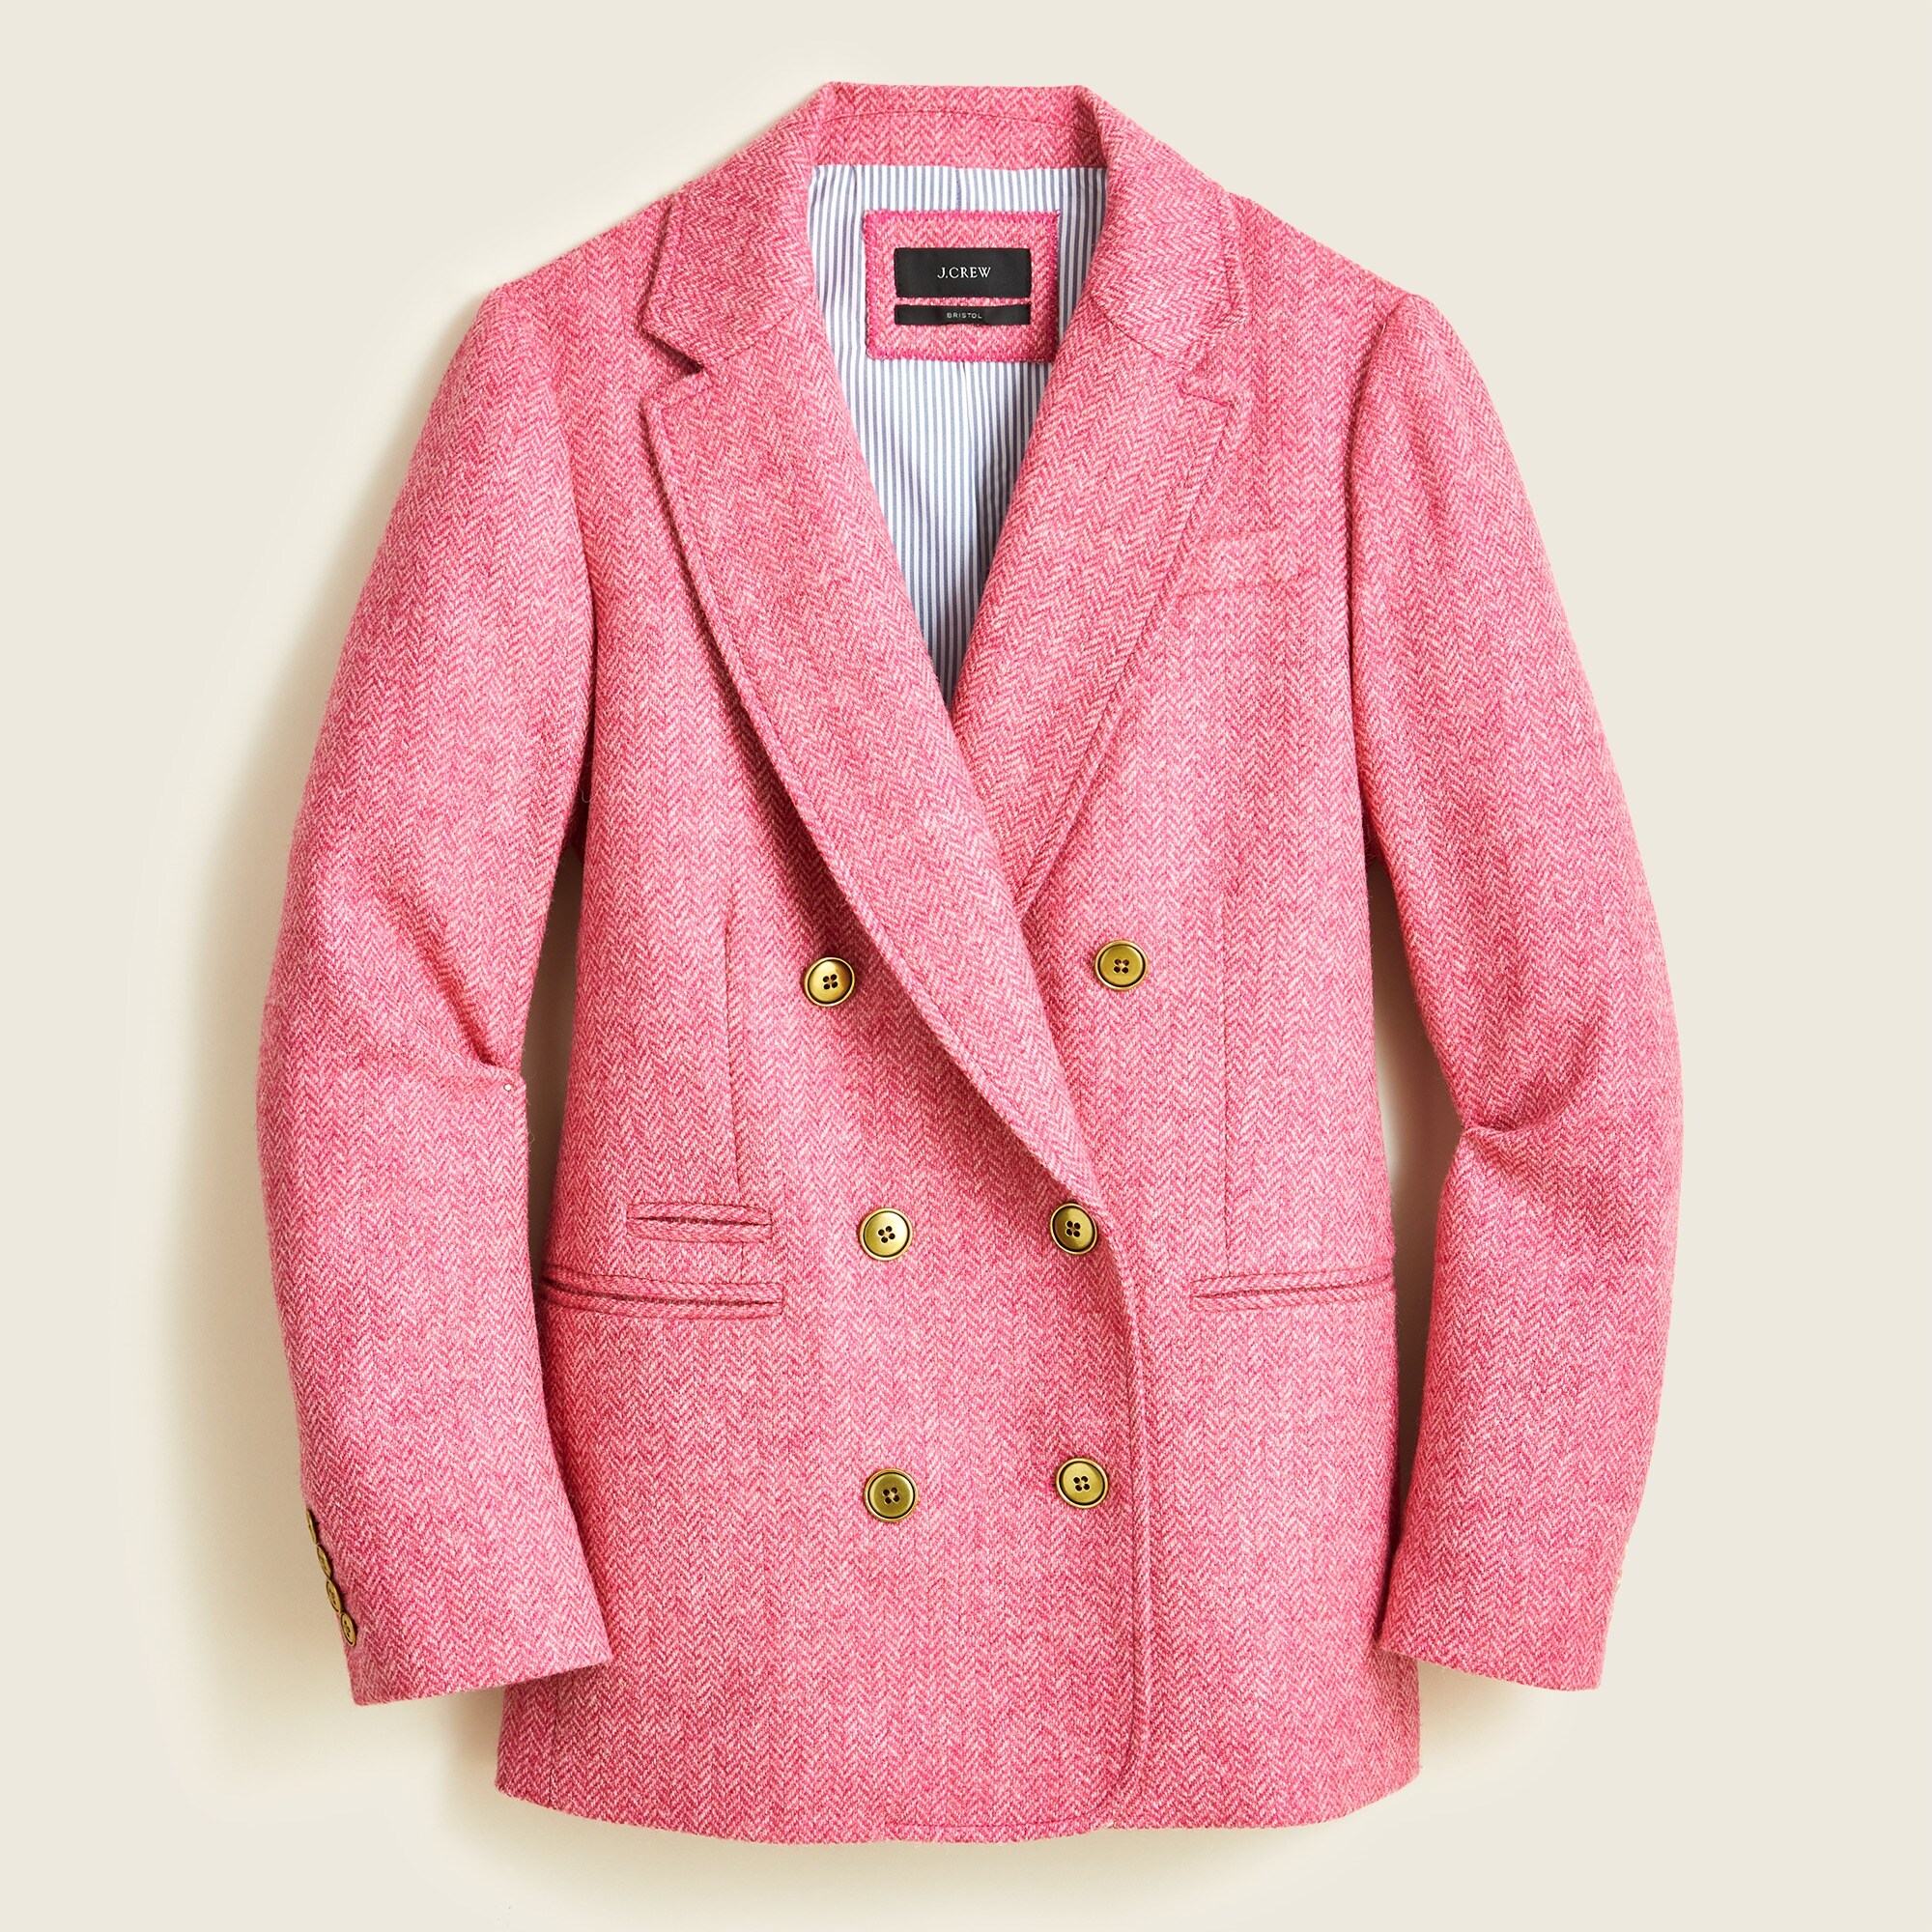 womens Bristol blazer in pink English wool herringbone